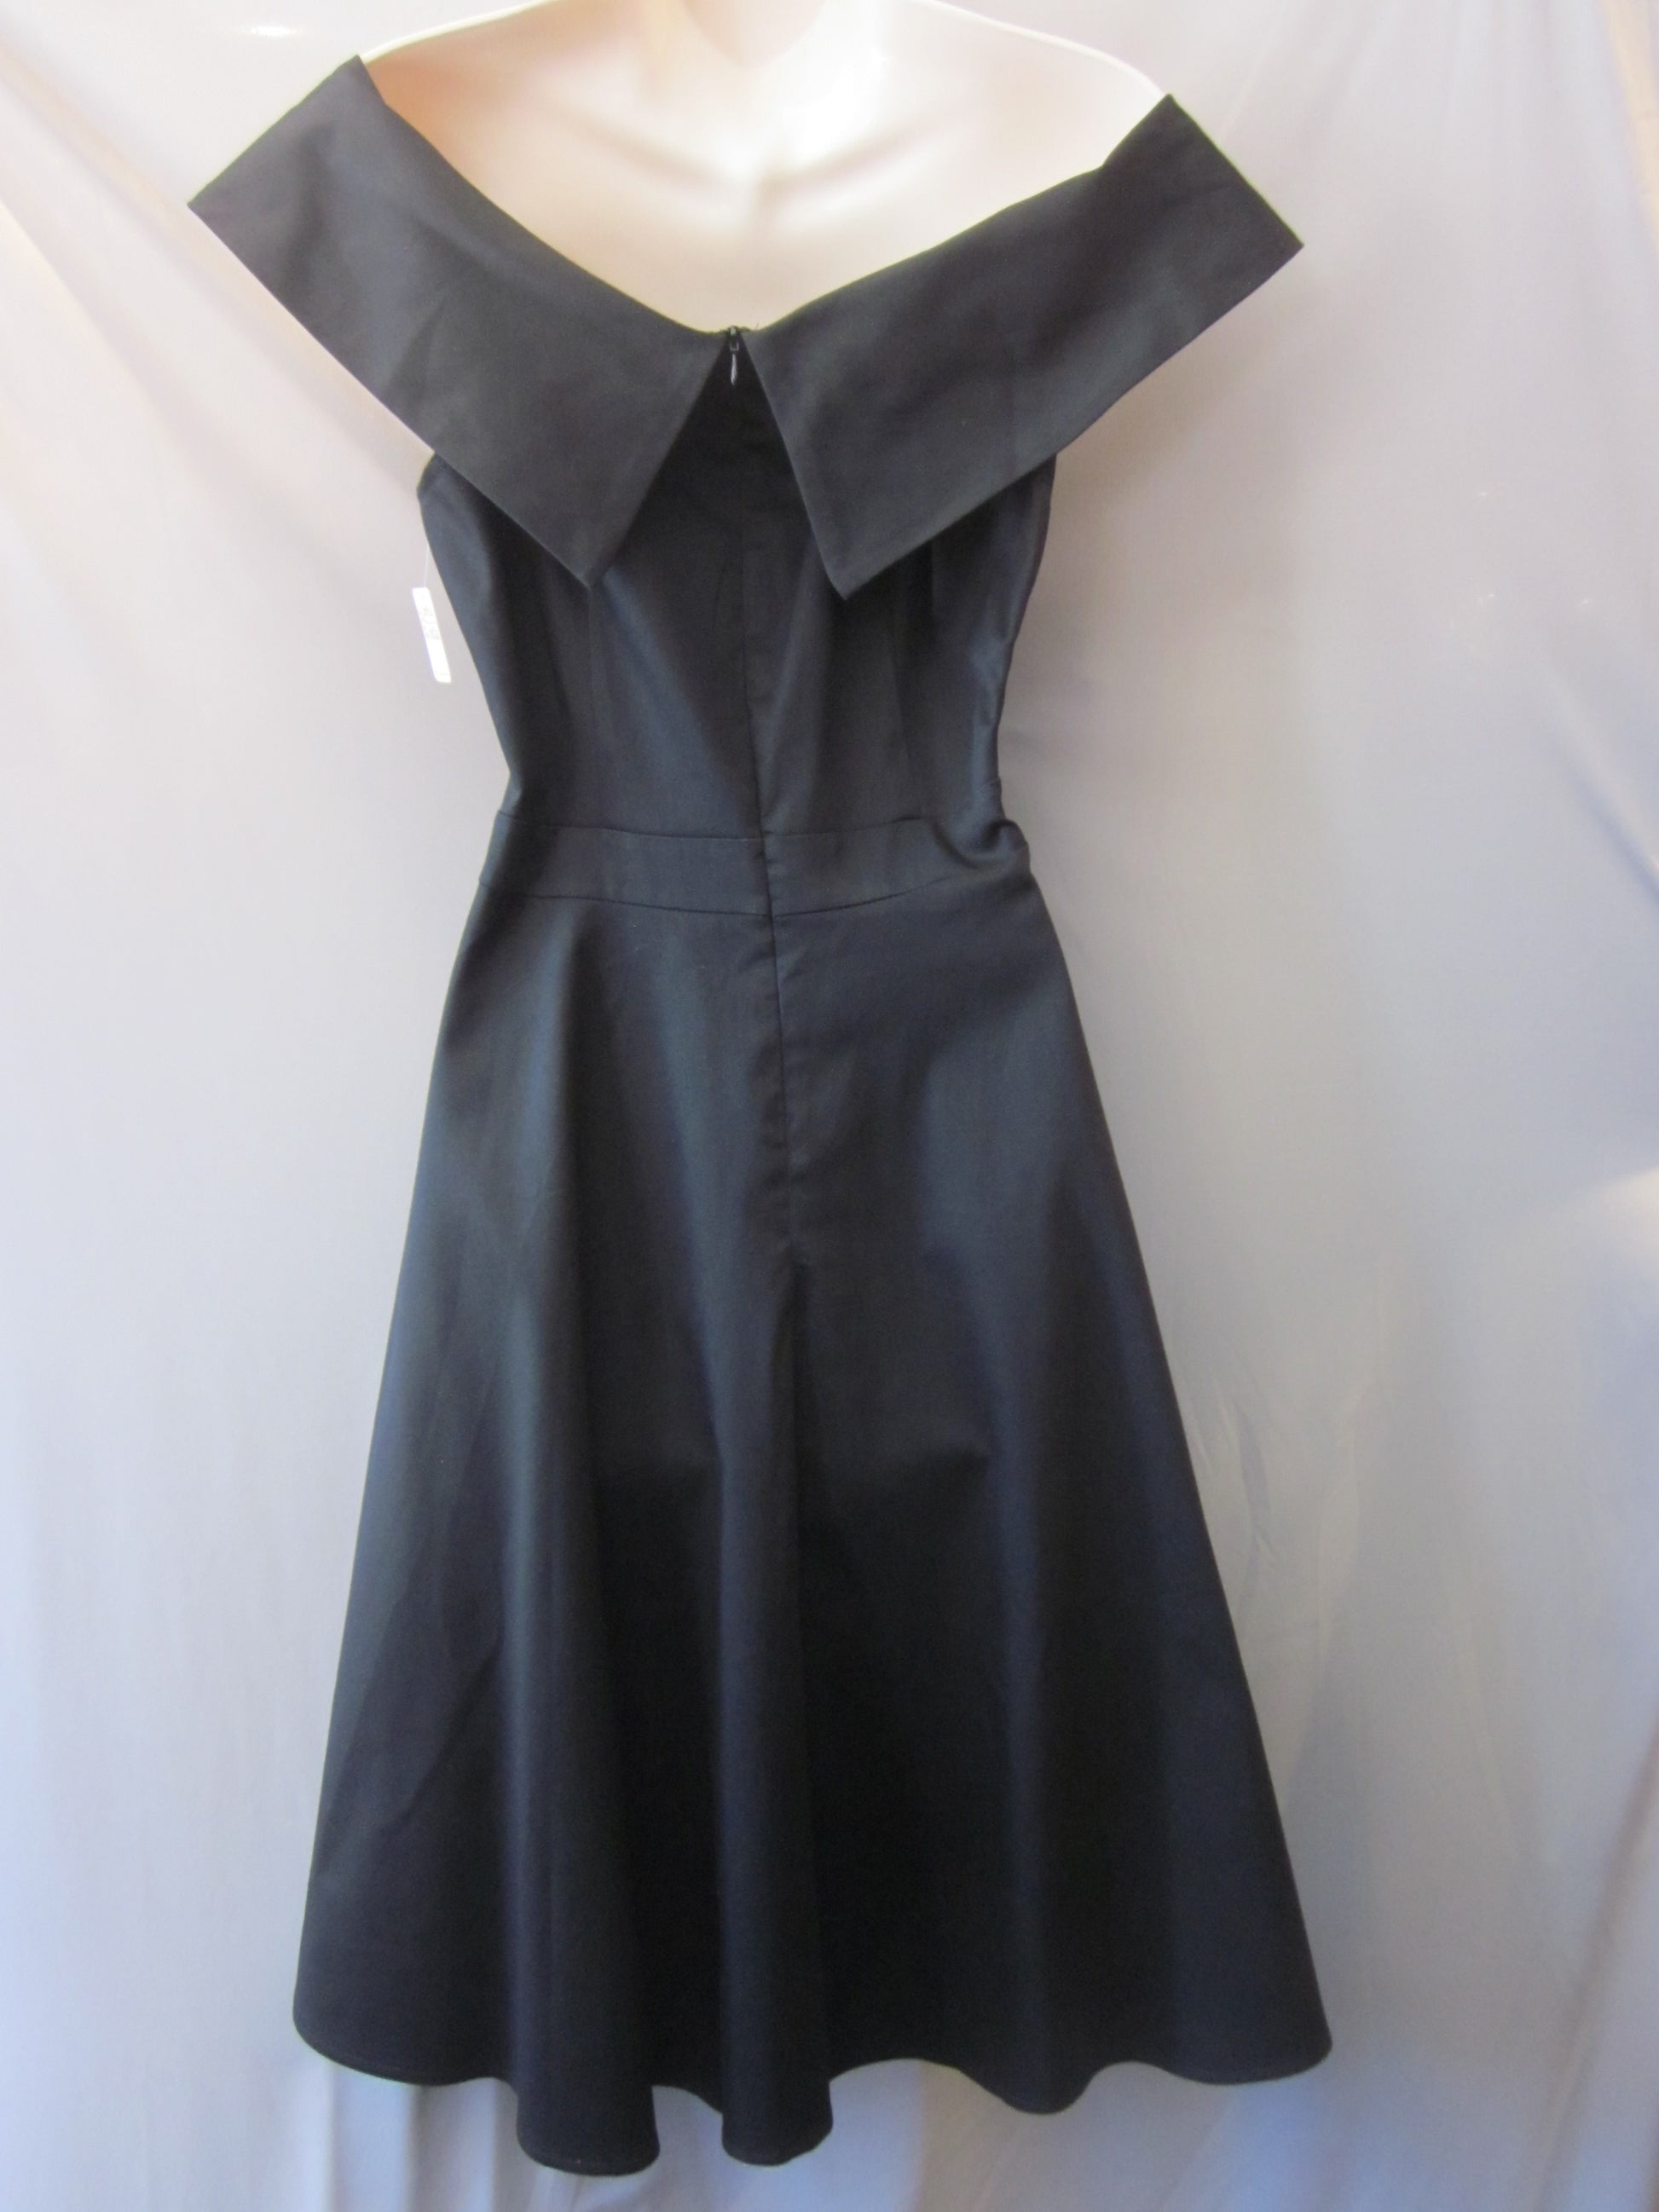 Short Formal Dress Size Large Style Z9733 - MISS LESTER'S 